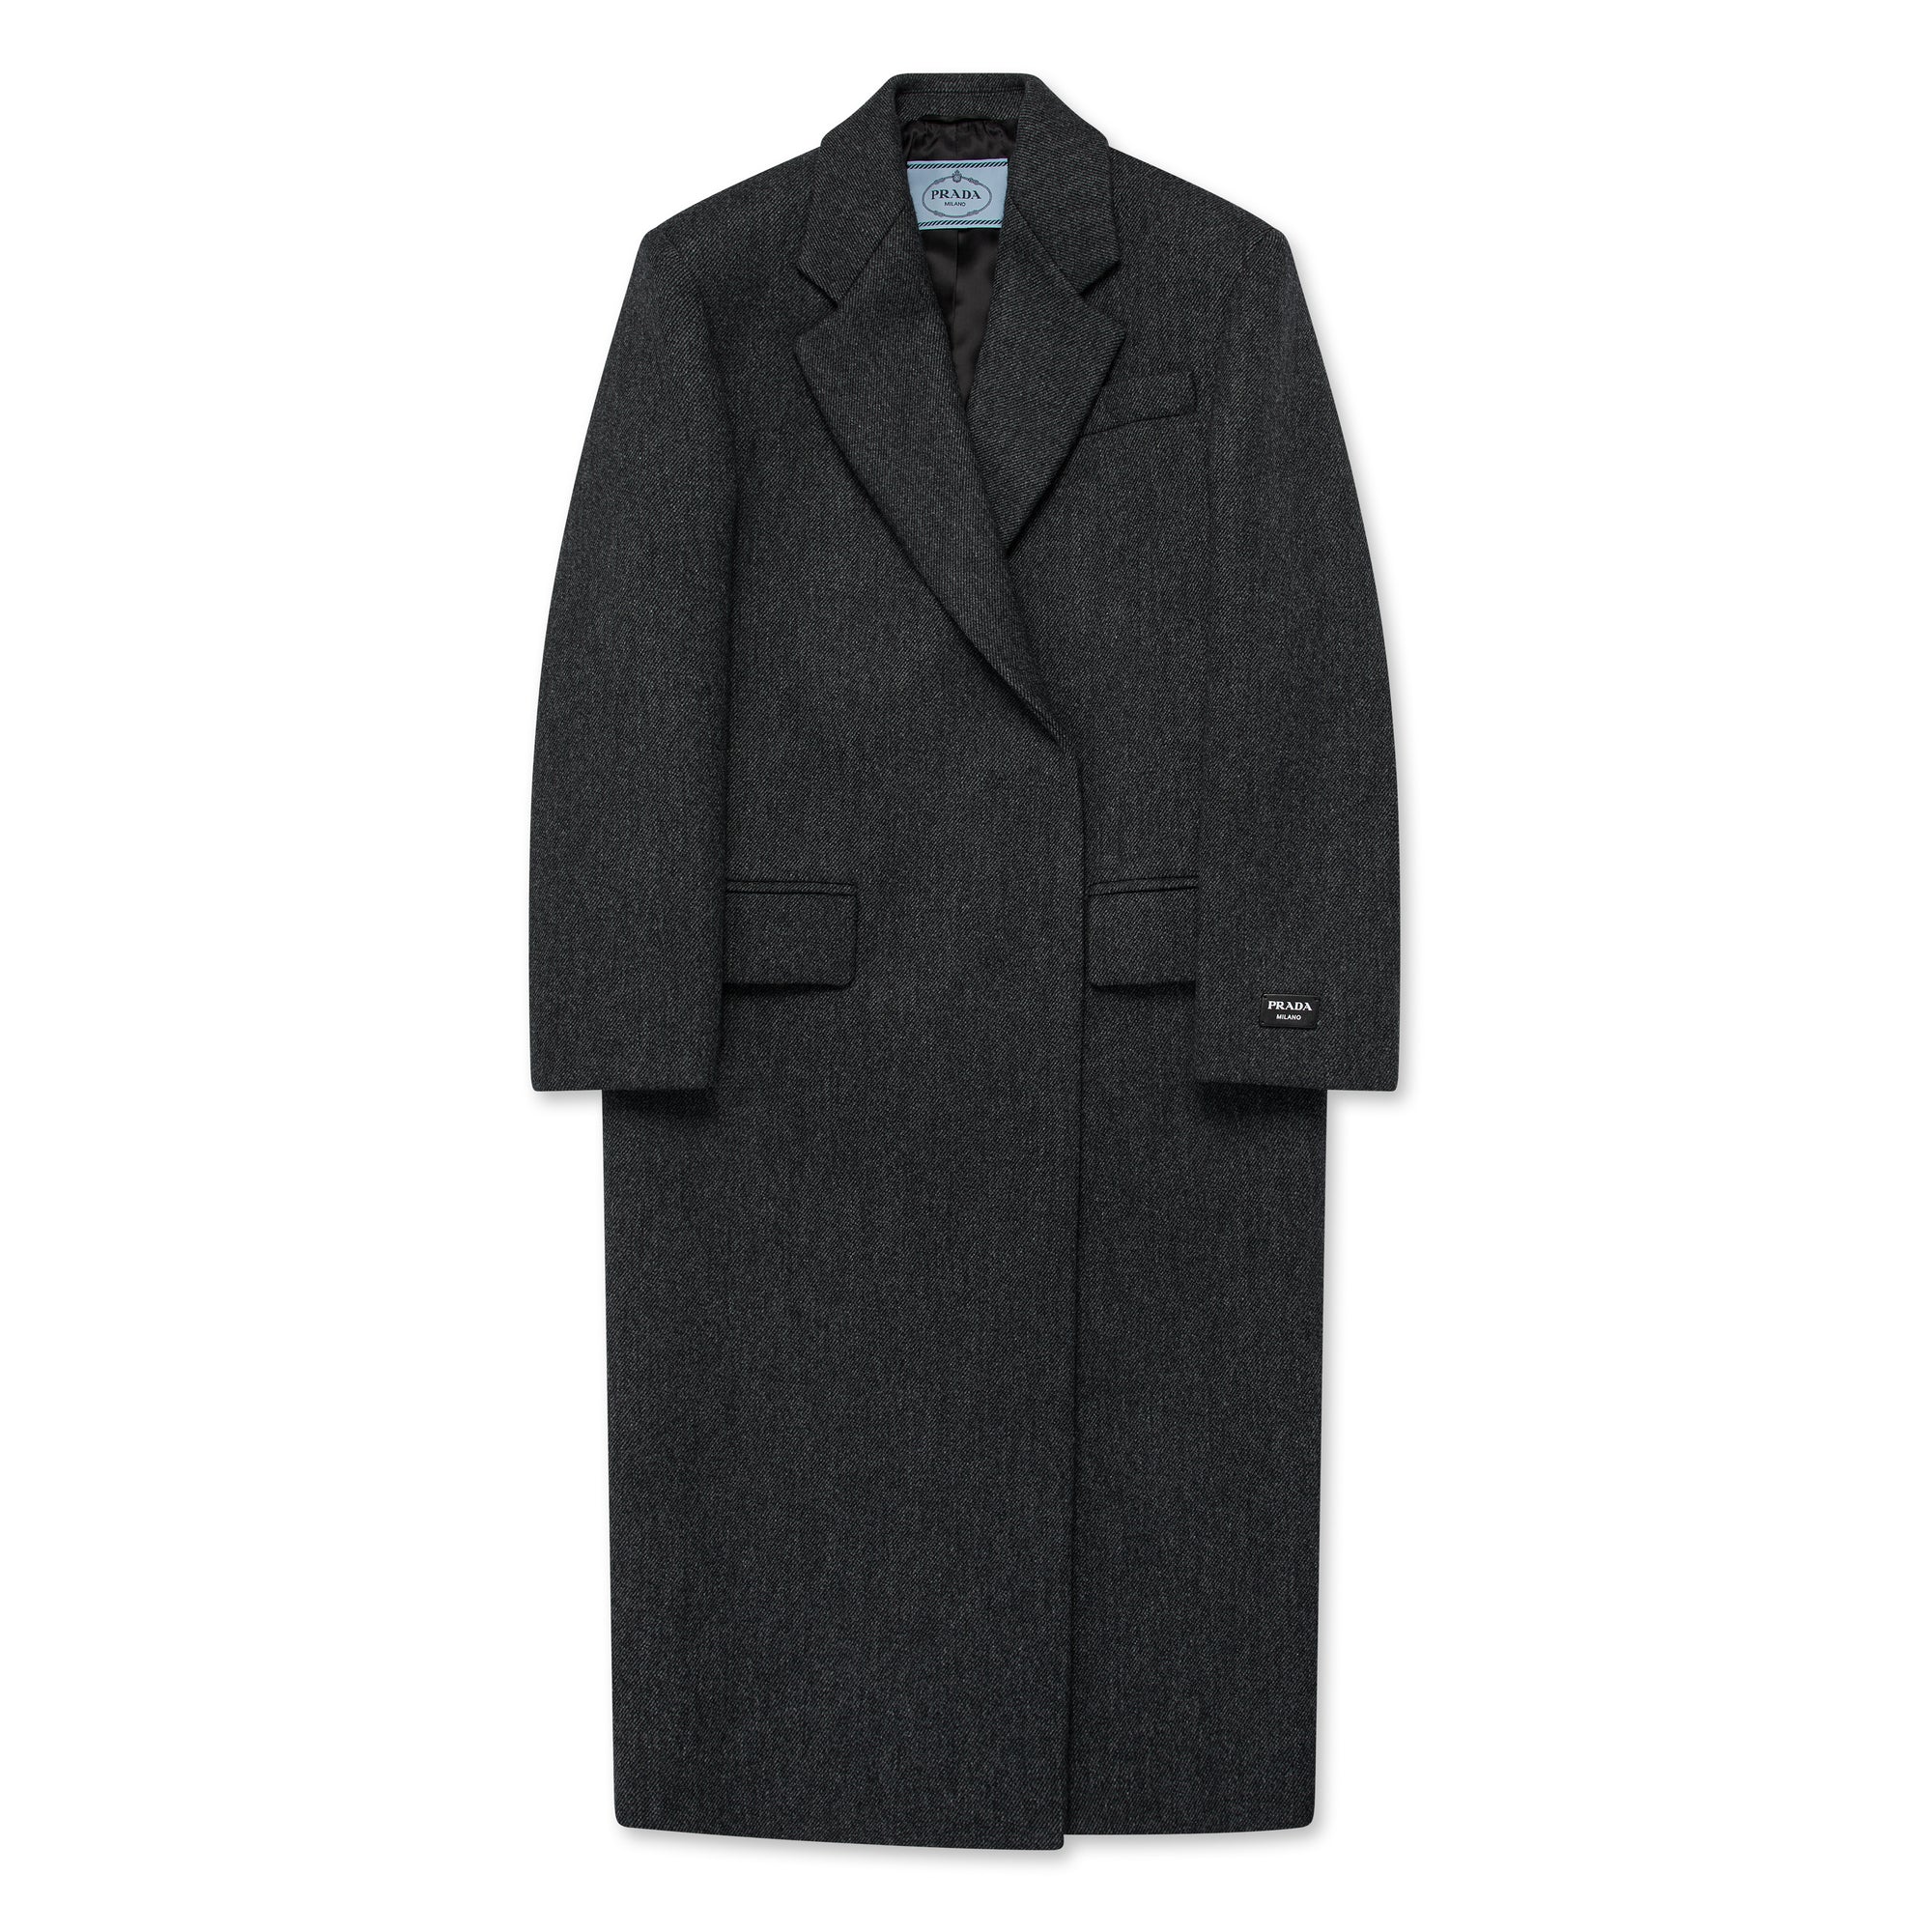 Prada - Women's Coat - (Grey) view 1